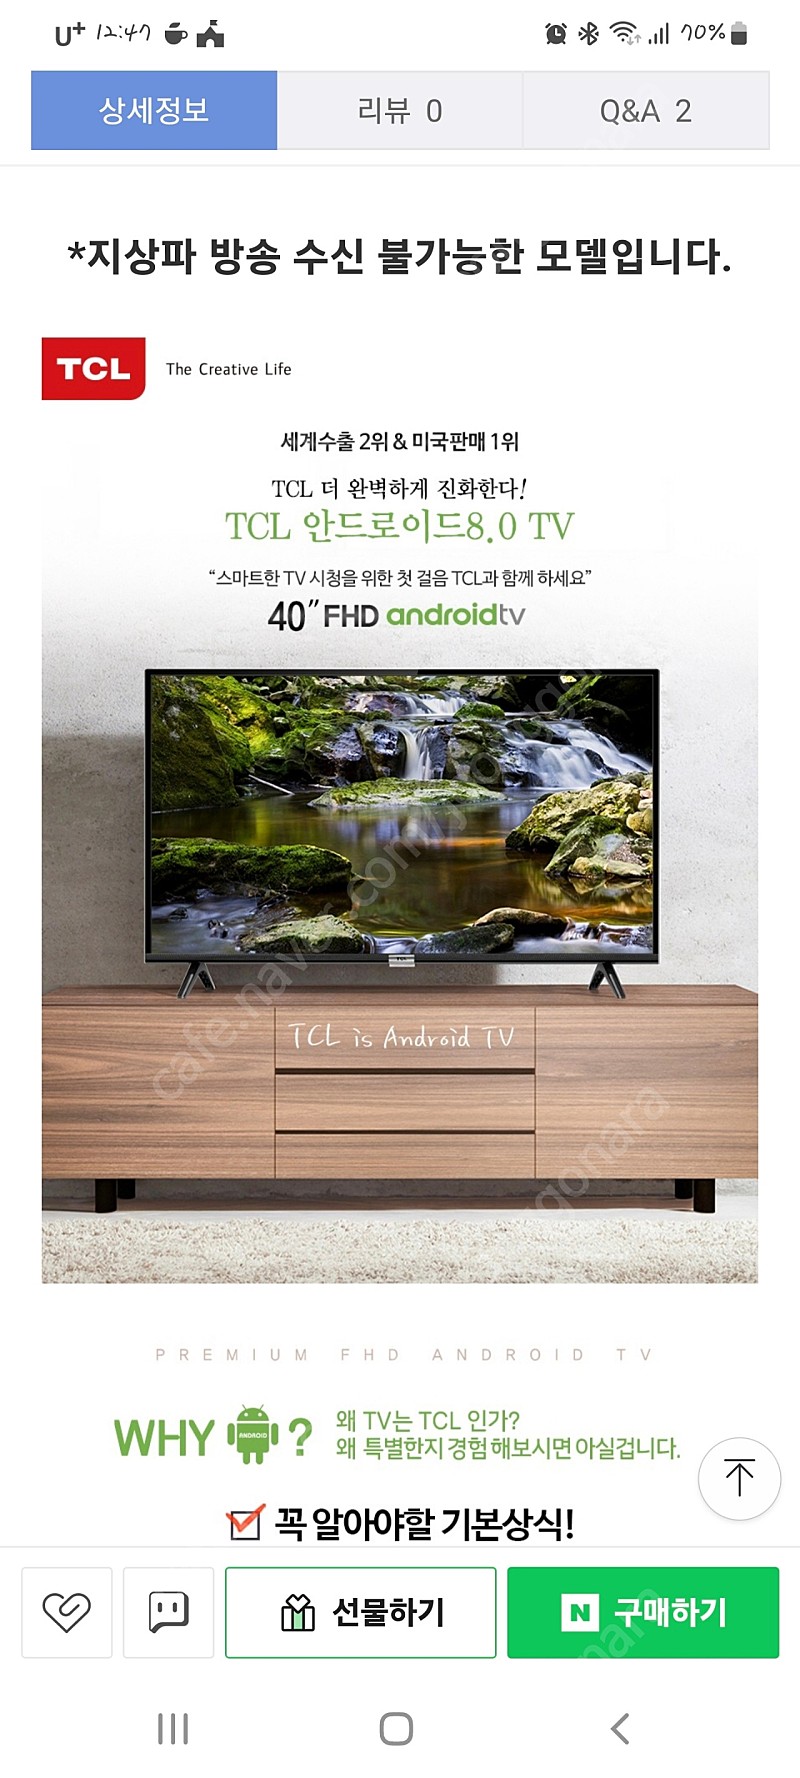 TCL FHD 안드로이드 TV 40S6500 40인치 스마트 LED TV